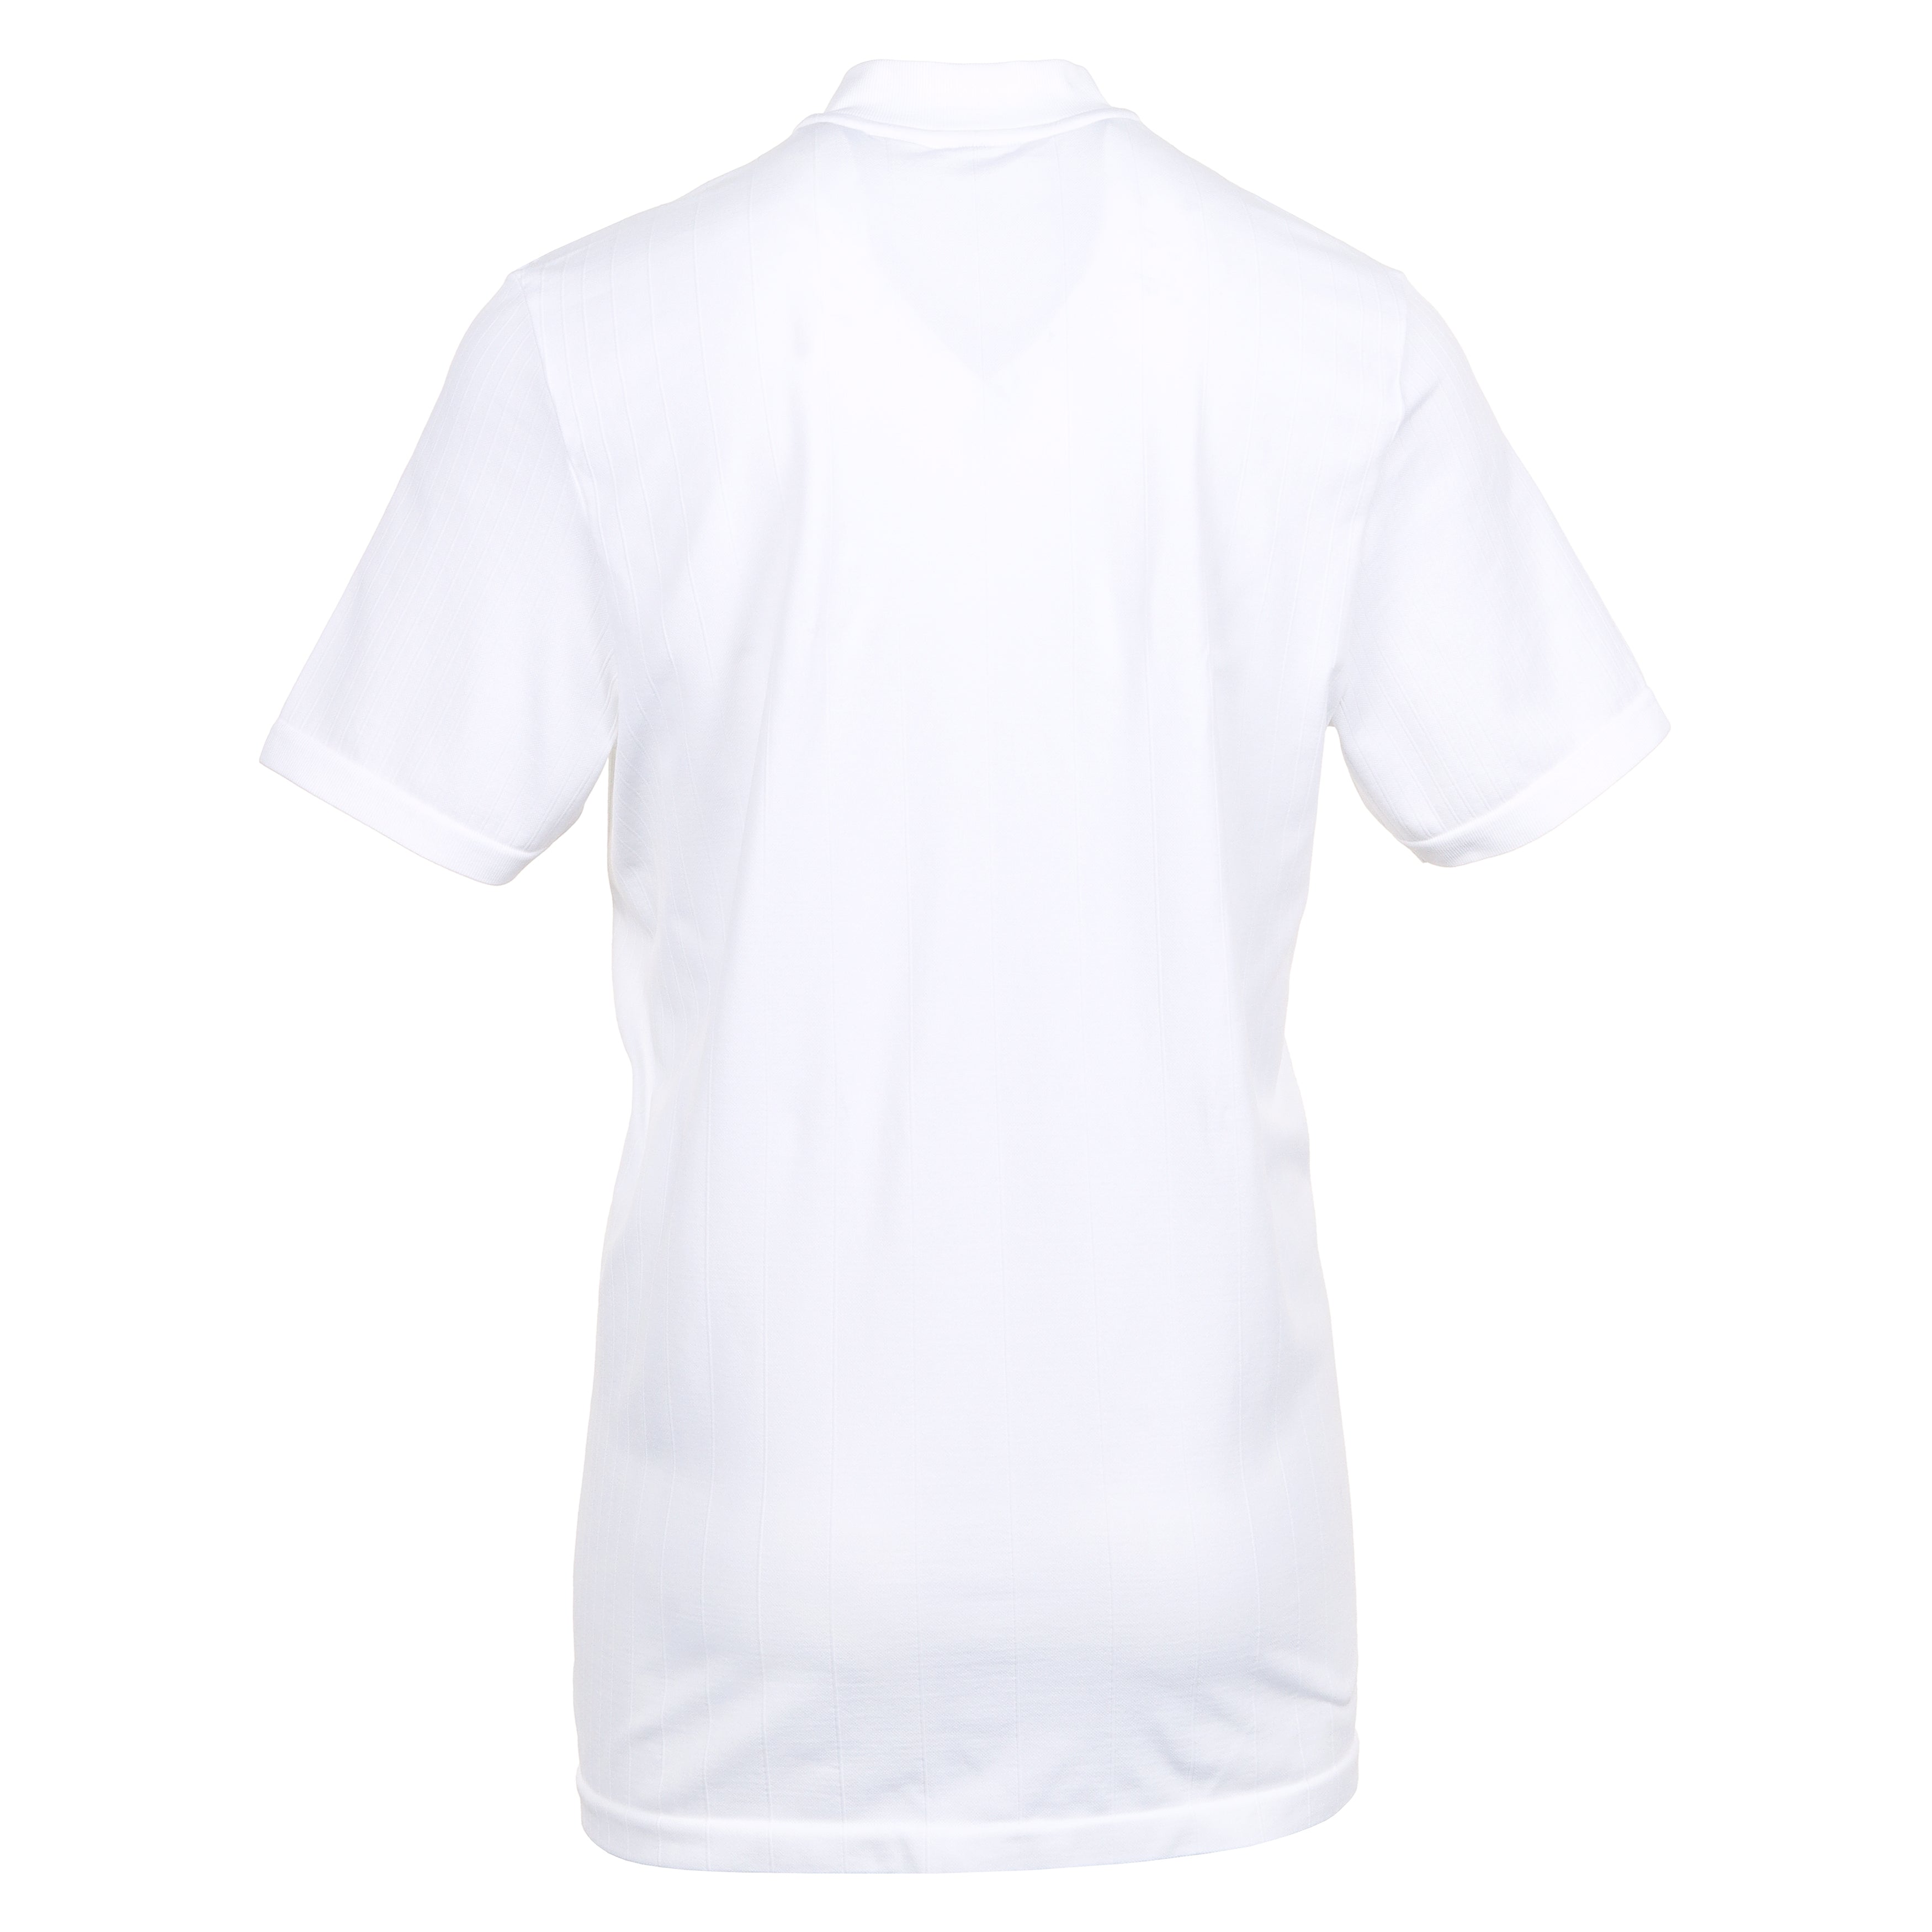 adidas Golf Ultimate365 Tour Primeknit Shirt IU4423 White | Function18